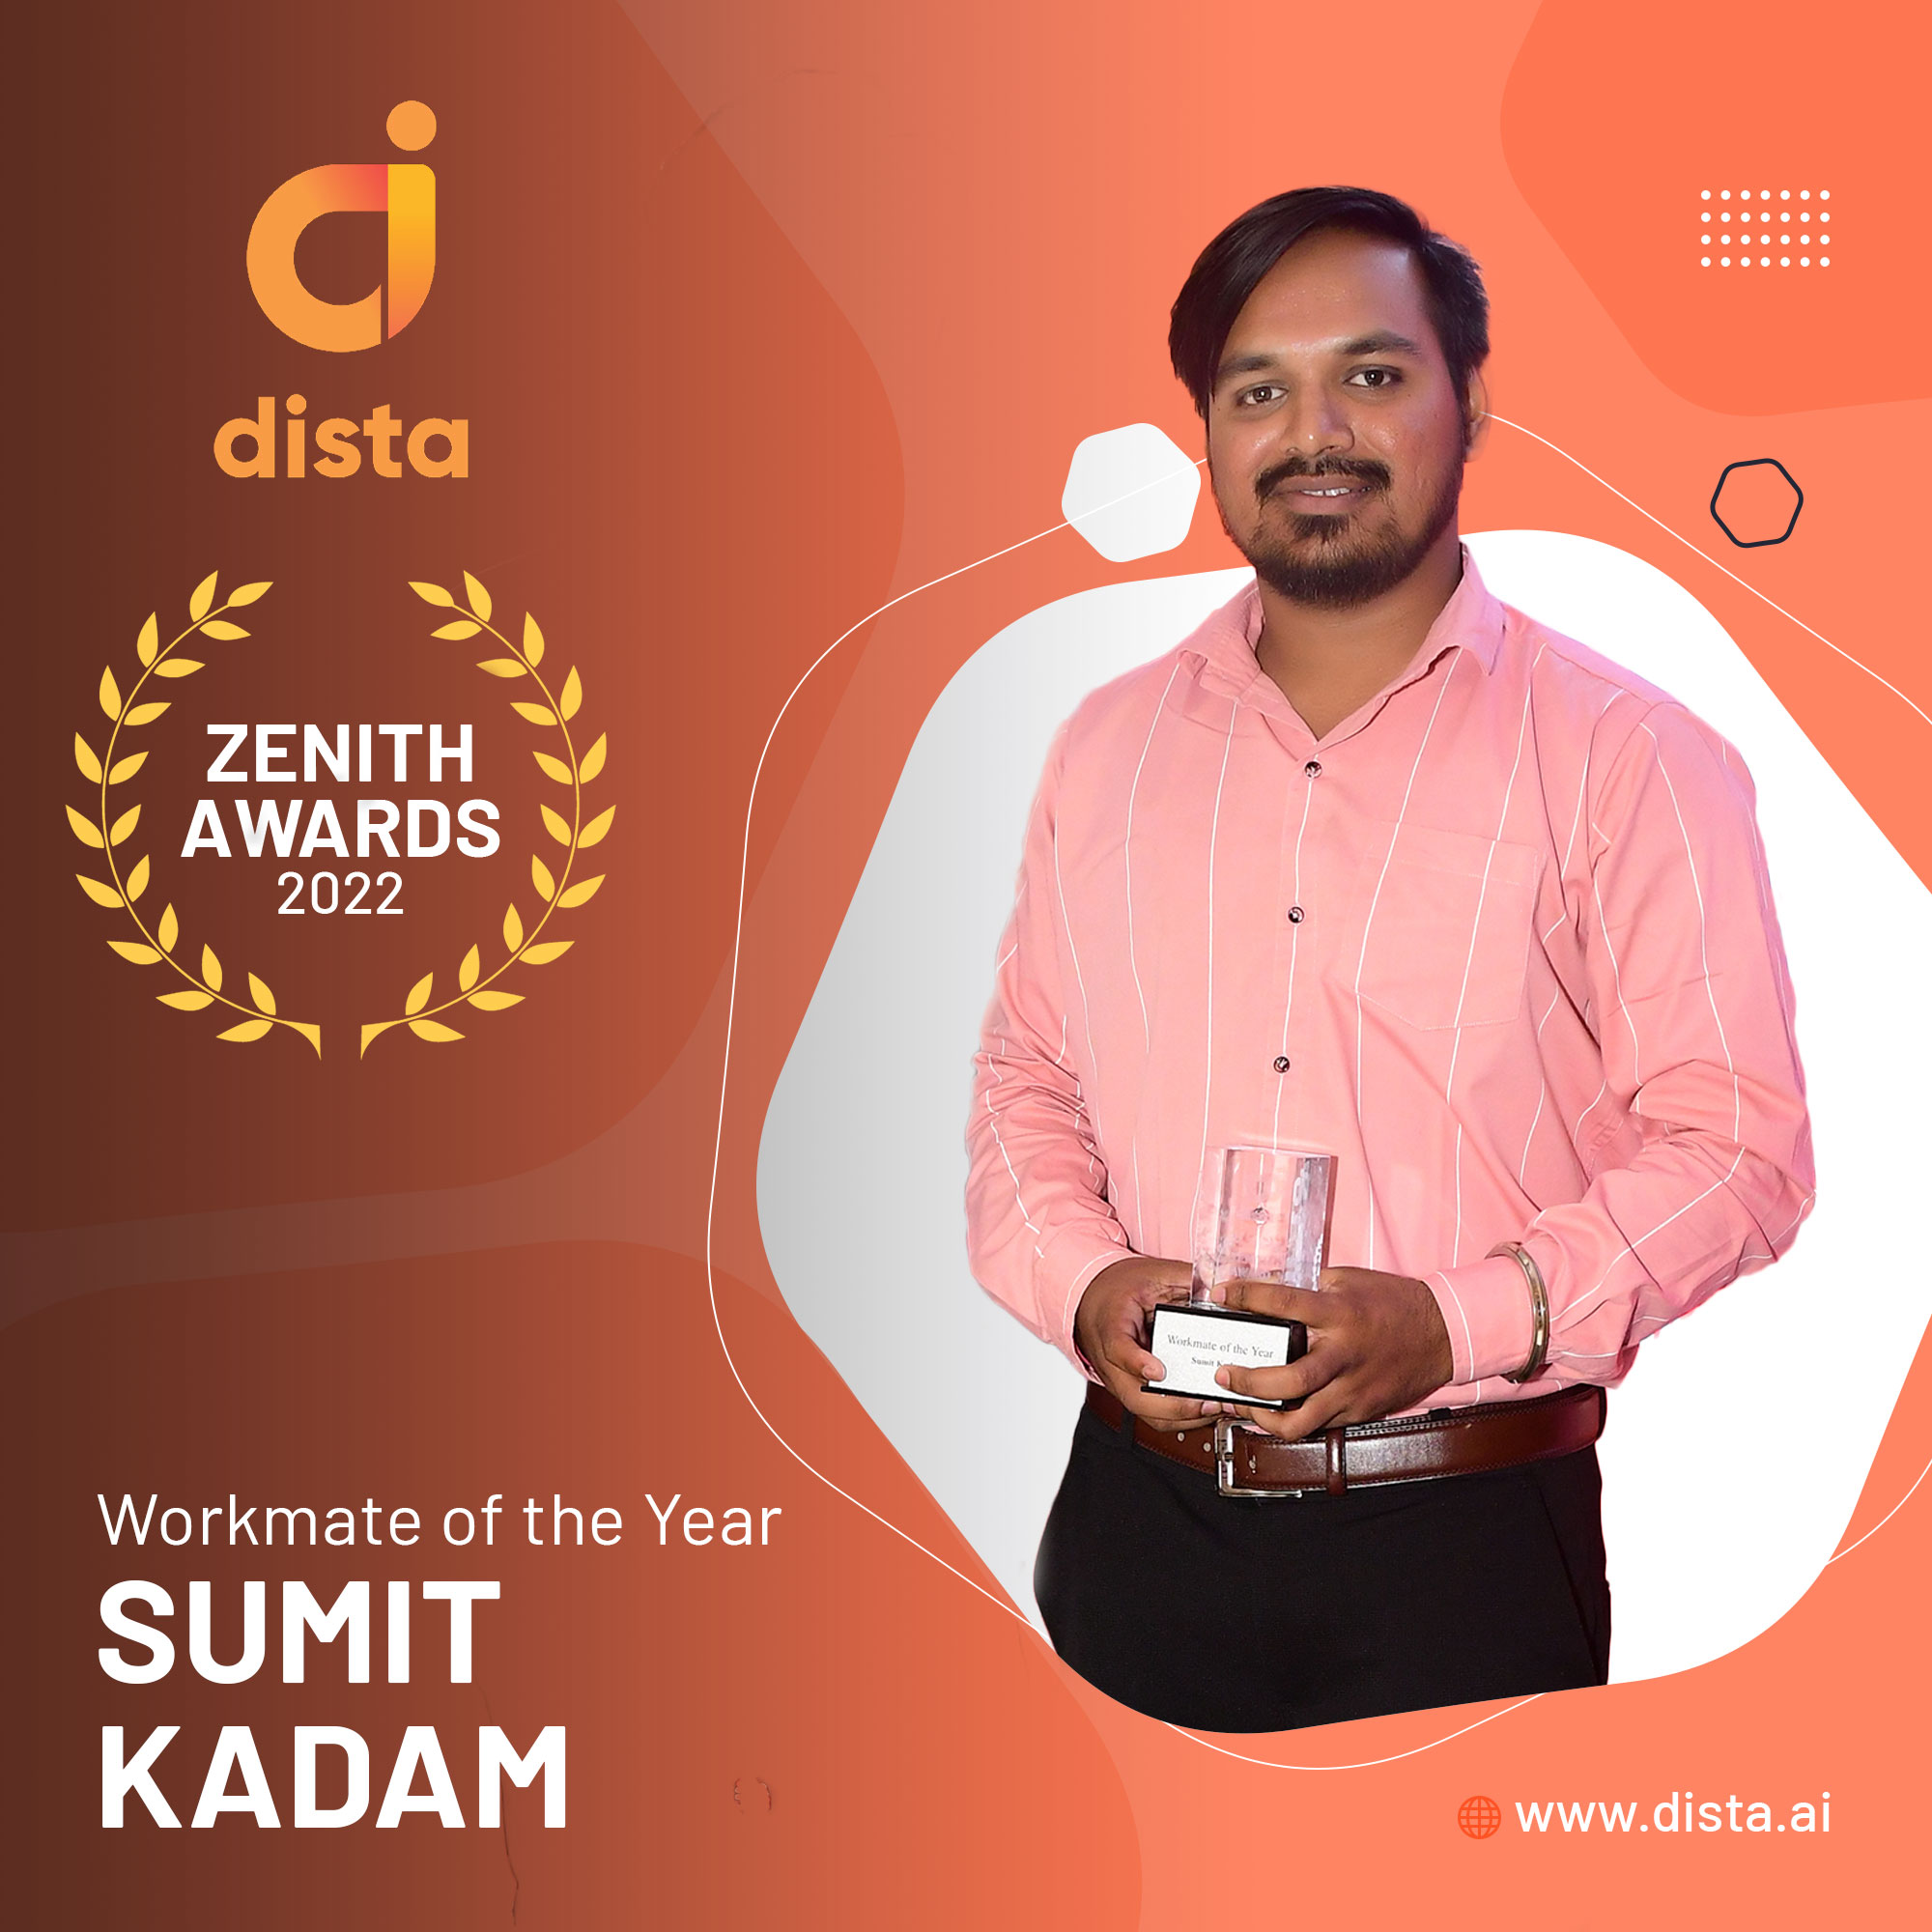 Sumit Kadam - Dista Zenith Awards 2022